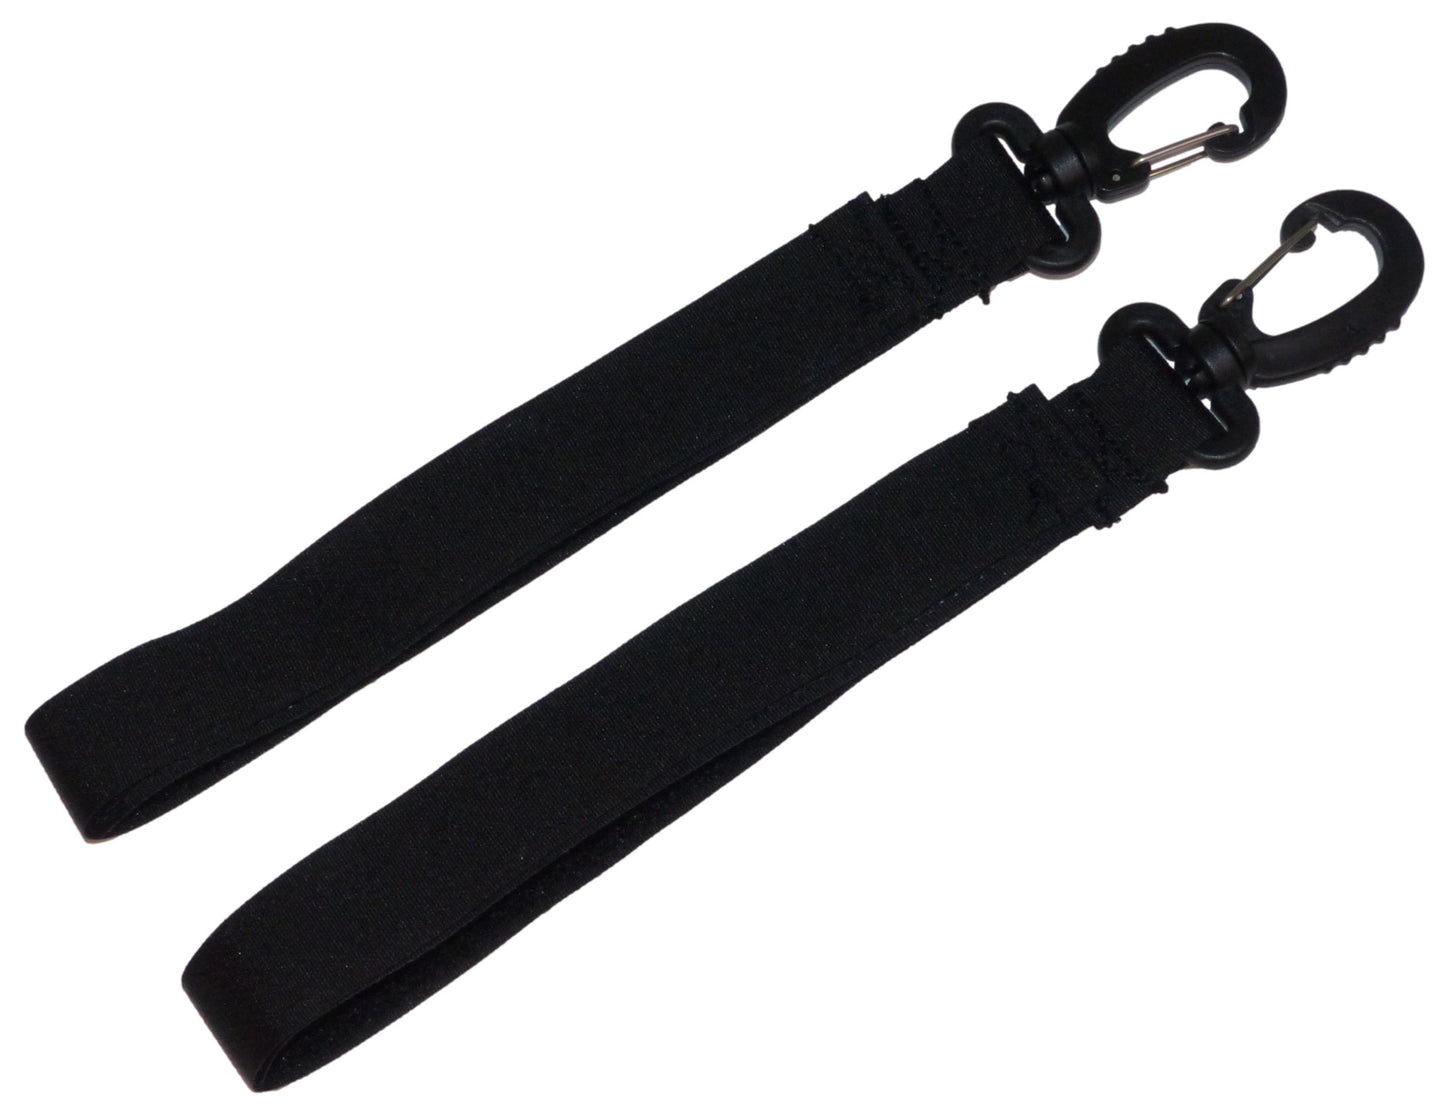 Benristraps 25mm Hook & Loop Hanging Strap with Snap Buckle (Pair), black, large